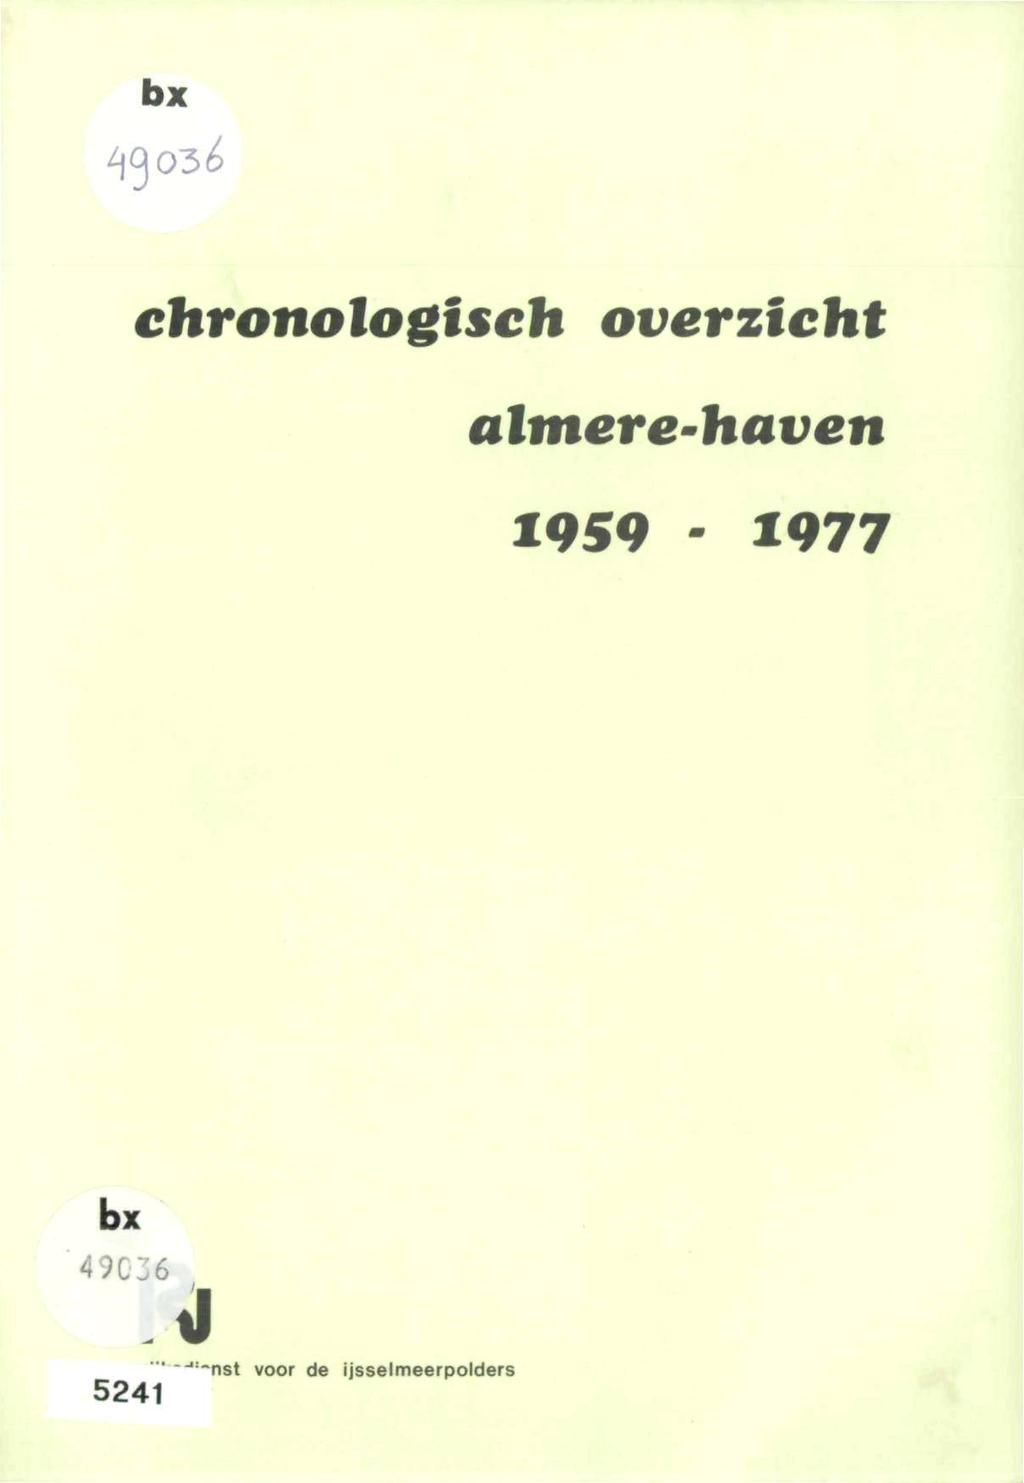 bx ^Oslchronologisch overzicht almere-haven 1959-1977